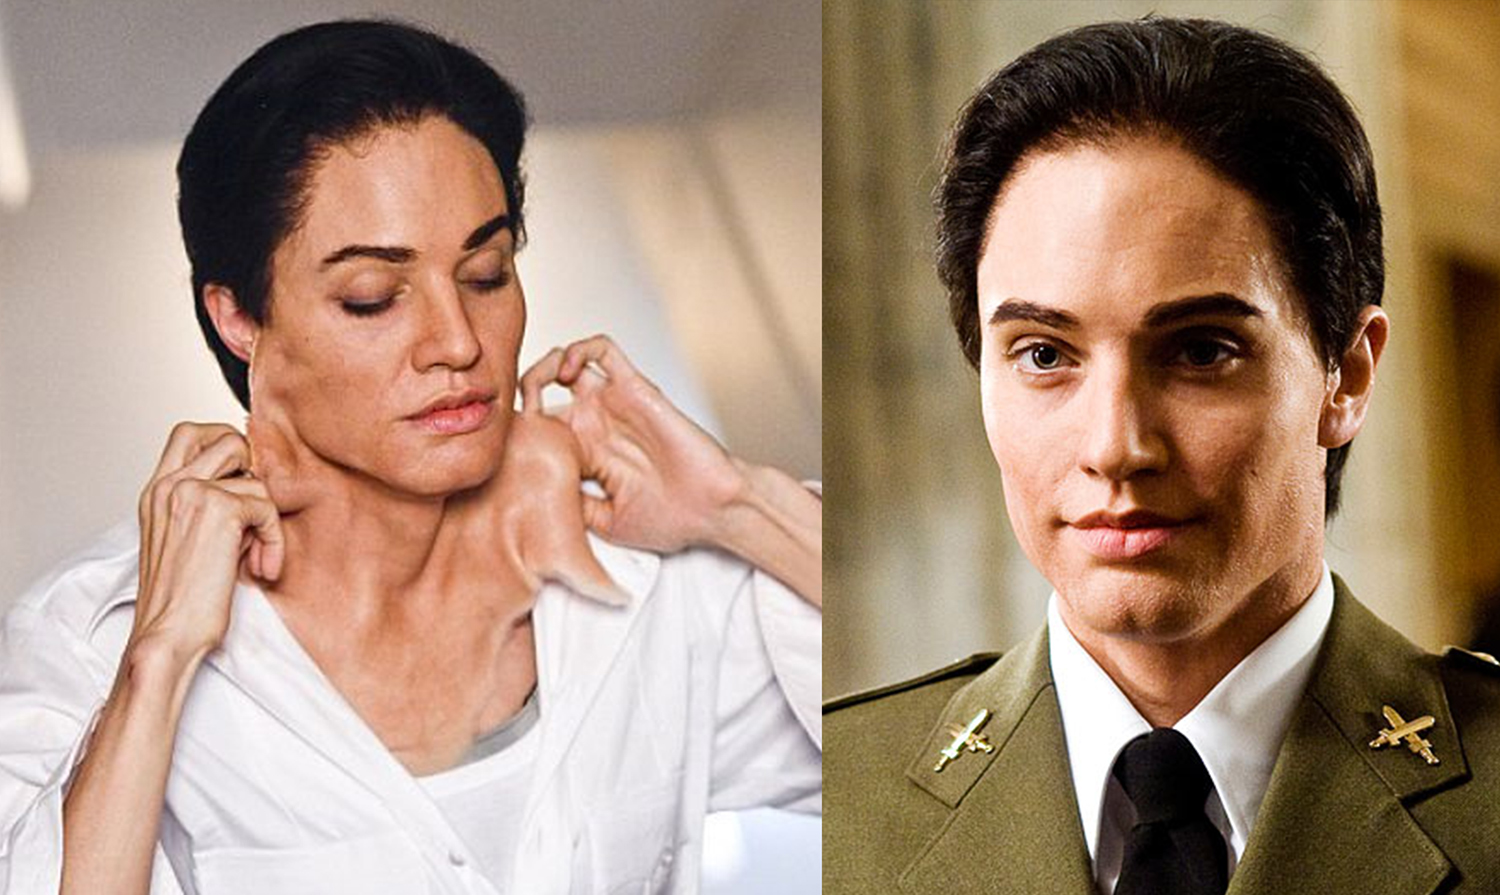 Angelina-Jolie-Transformed-into-Man-for-Salt-Role-3 copy.jpg